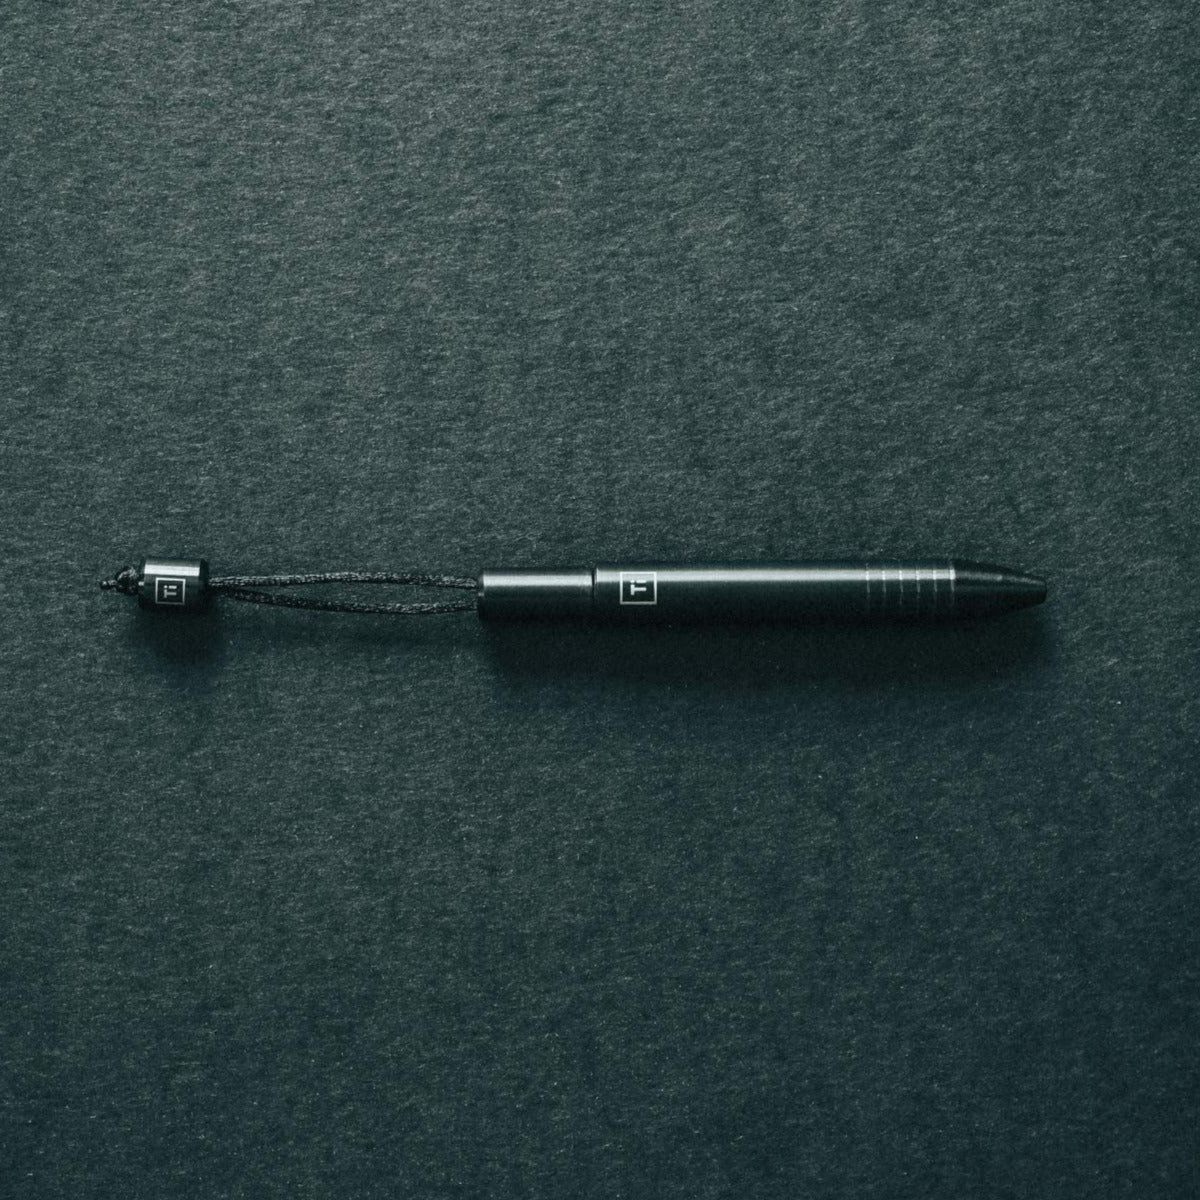 Big Idea Design - Mini Bolt Action Pen – KOHEZI